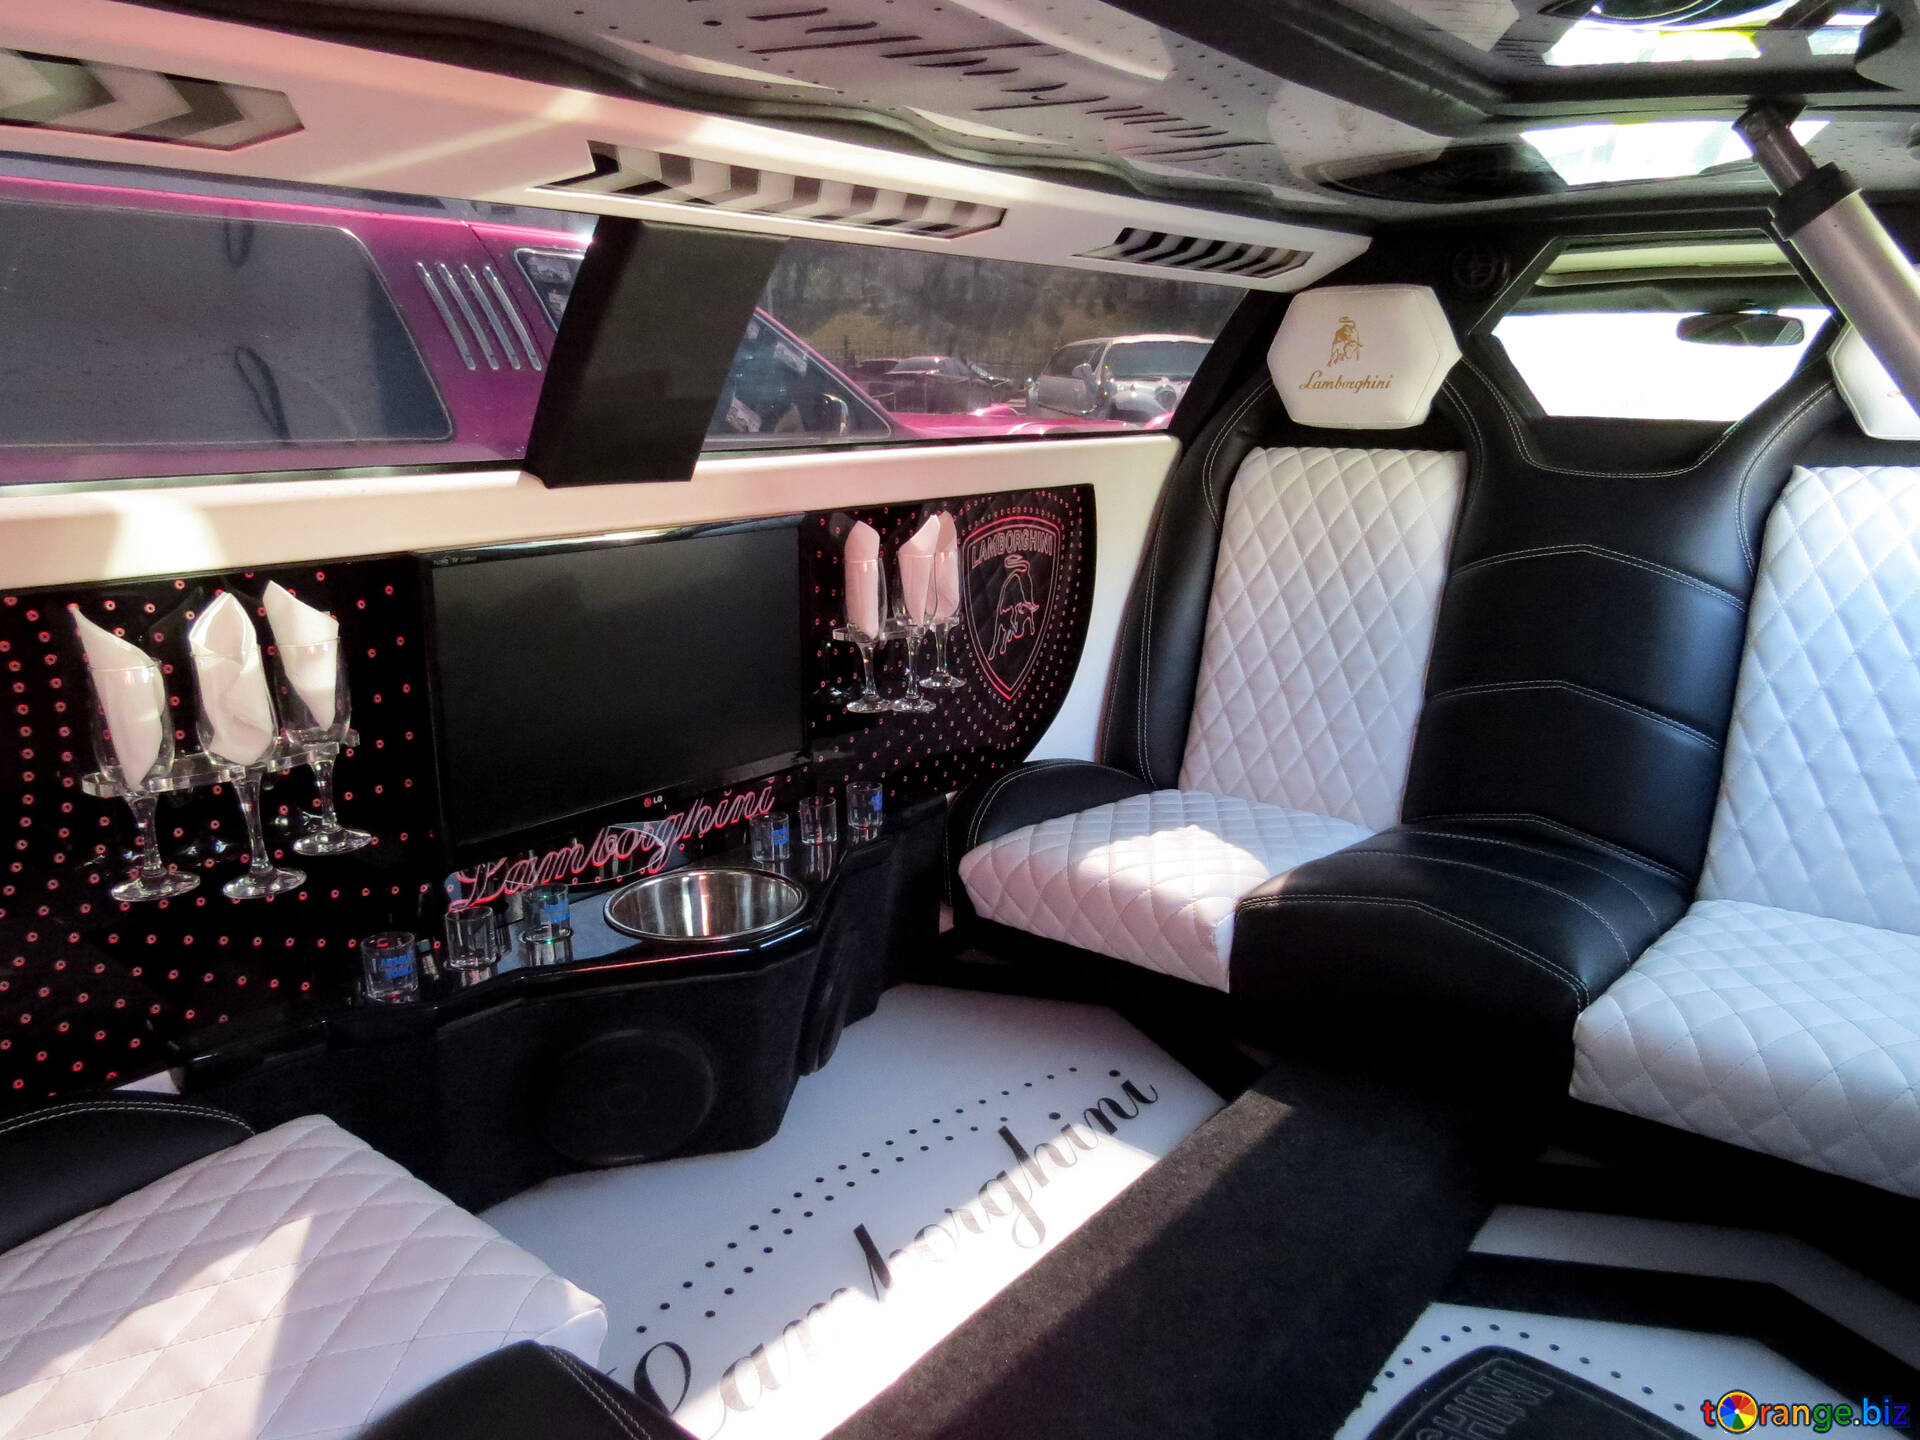 Limousine interior free image - № 49017